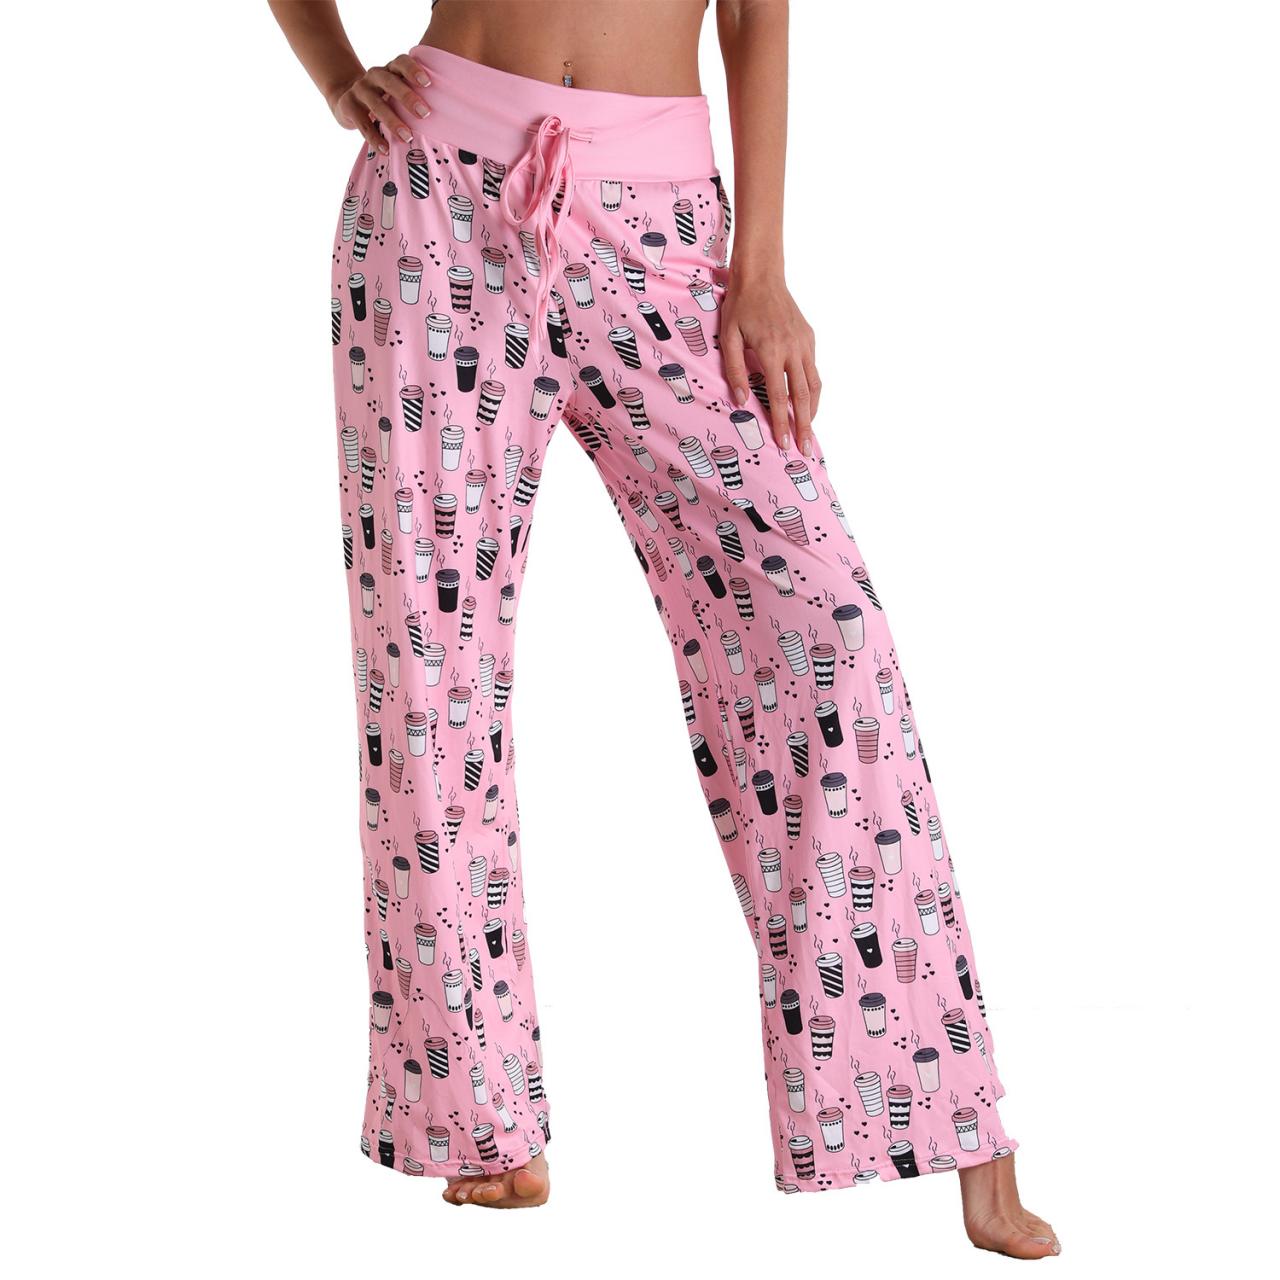 Leisure Sports Yoga Women Casual Pajamas Elastic Pocket Trousers Loose Fit Strap Pink Drinks Logo Printed Pants